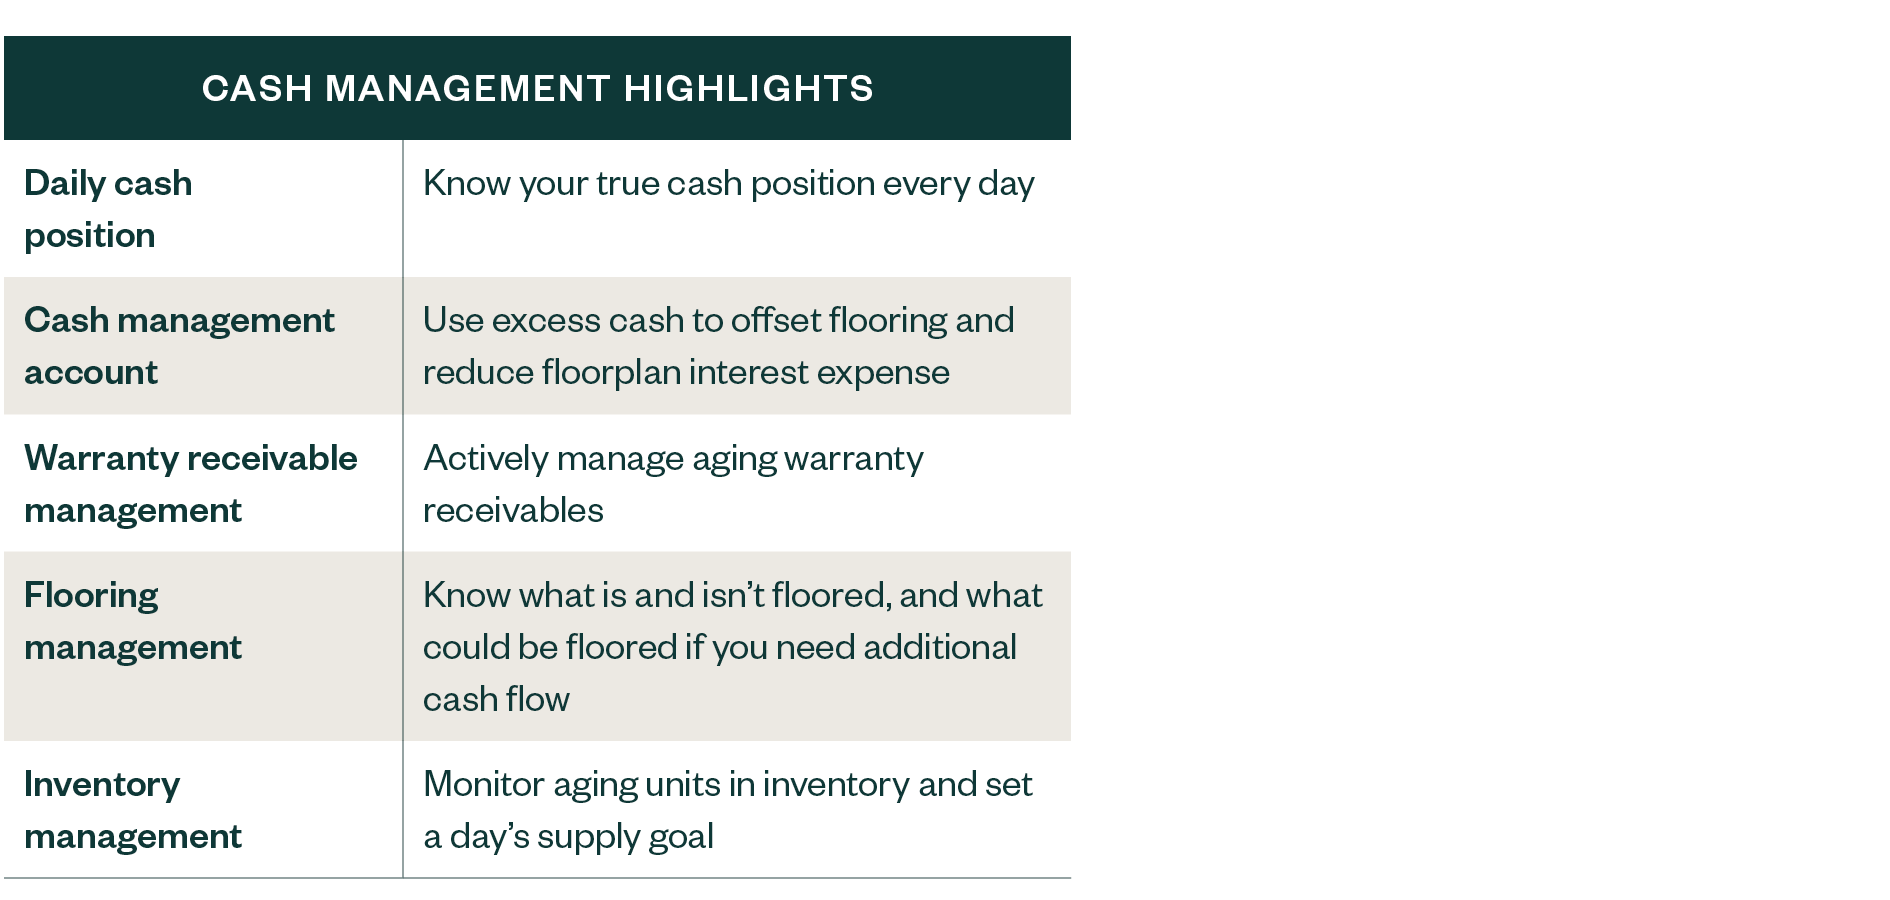 Cash Management Highlights table